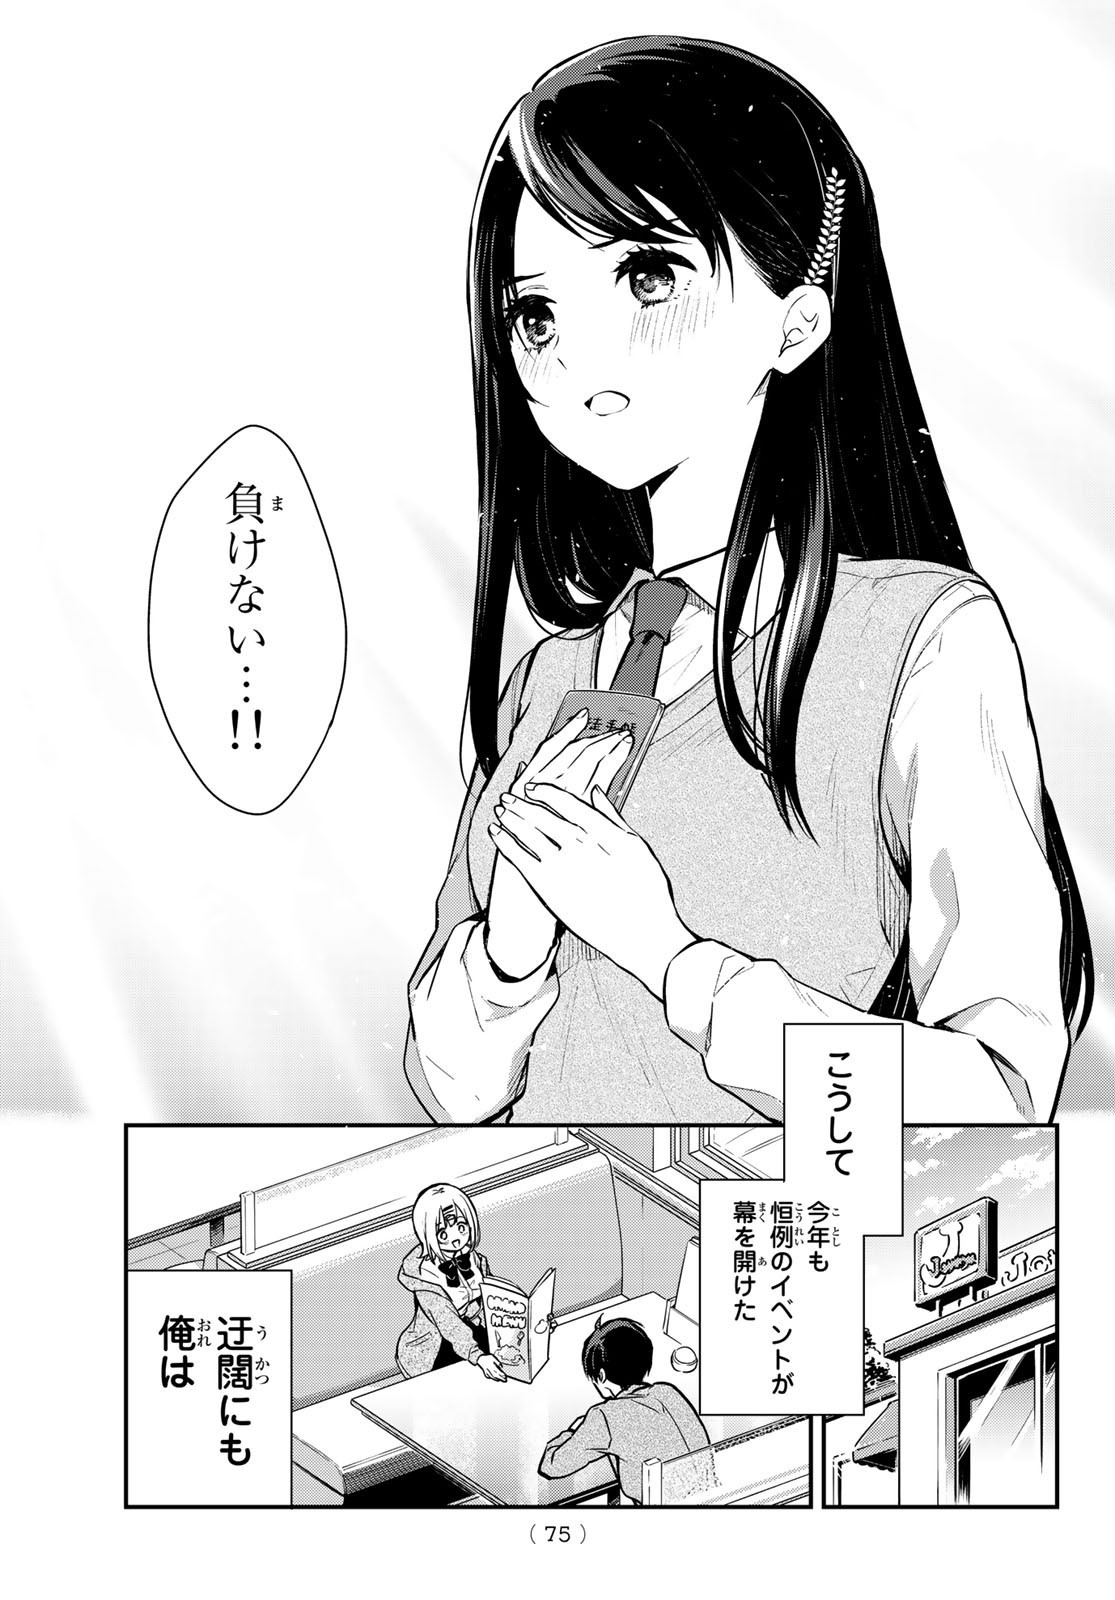 Kimi ga Megami Nara Ii no ni (I Wish You Were My Muse) - Chapter 001 - Page 59